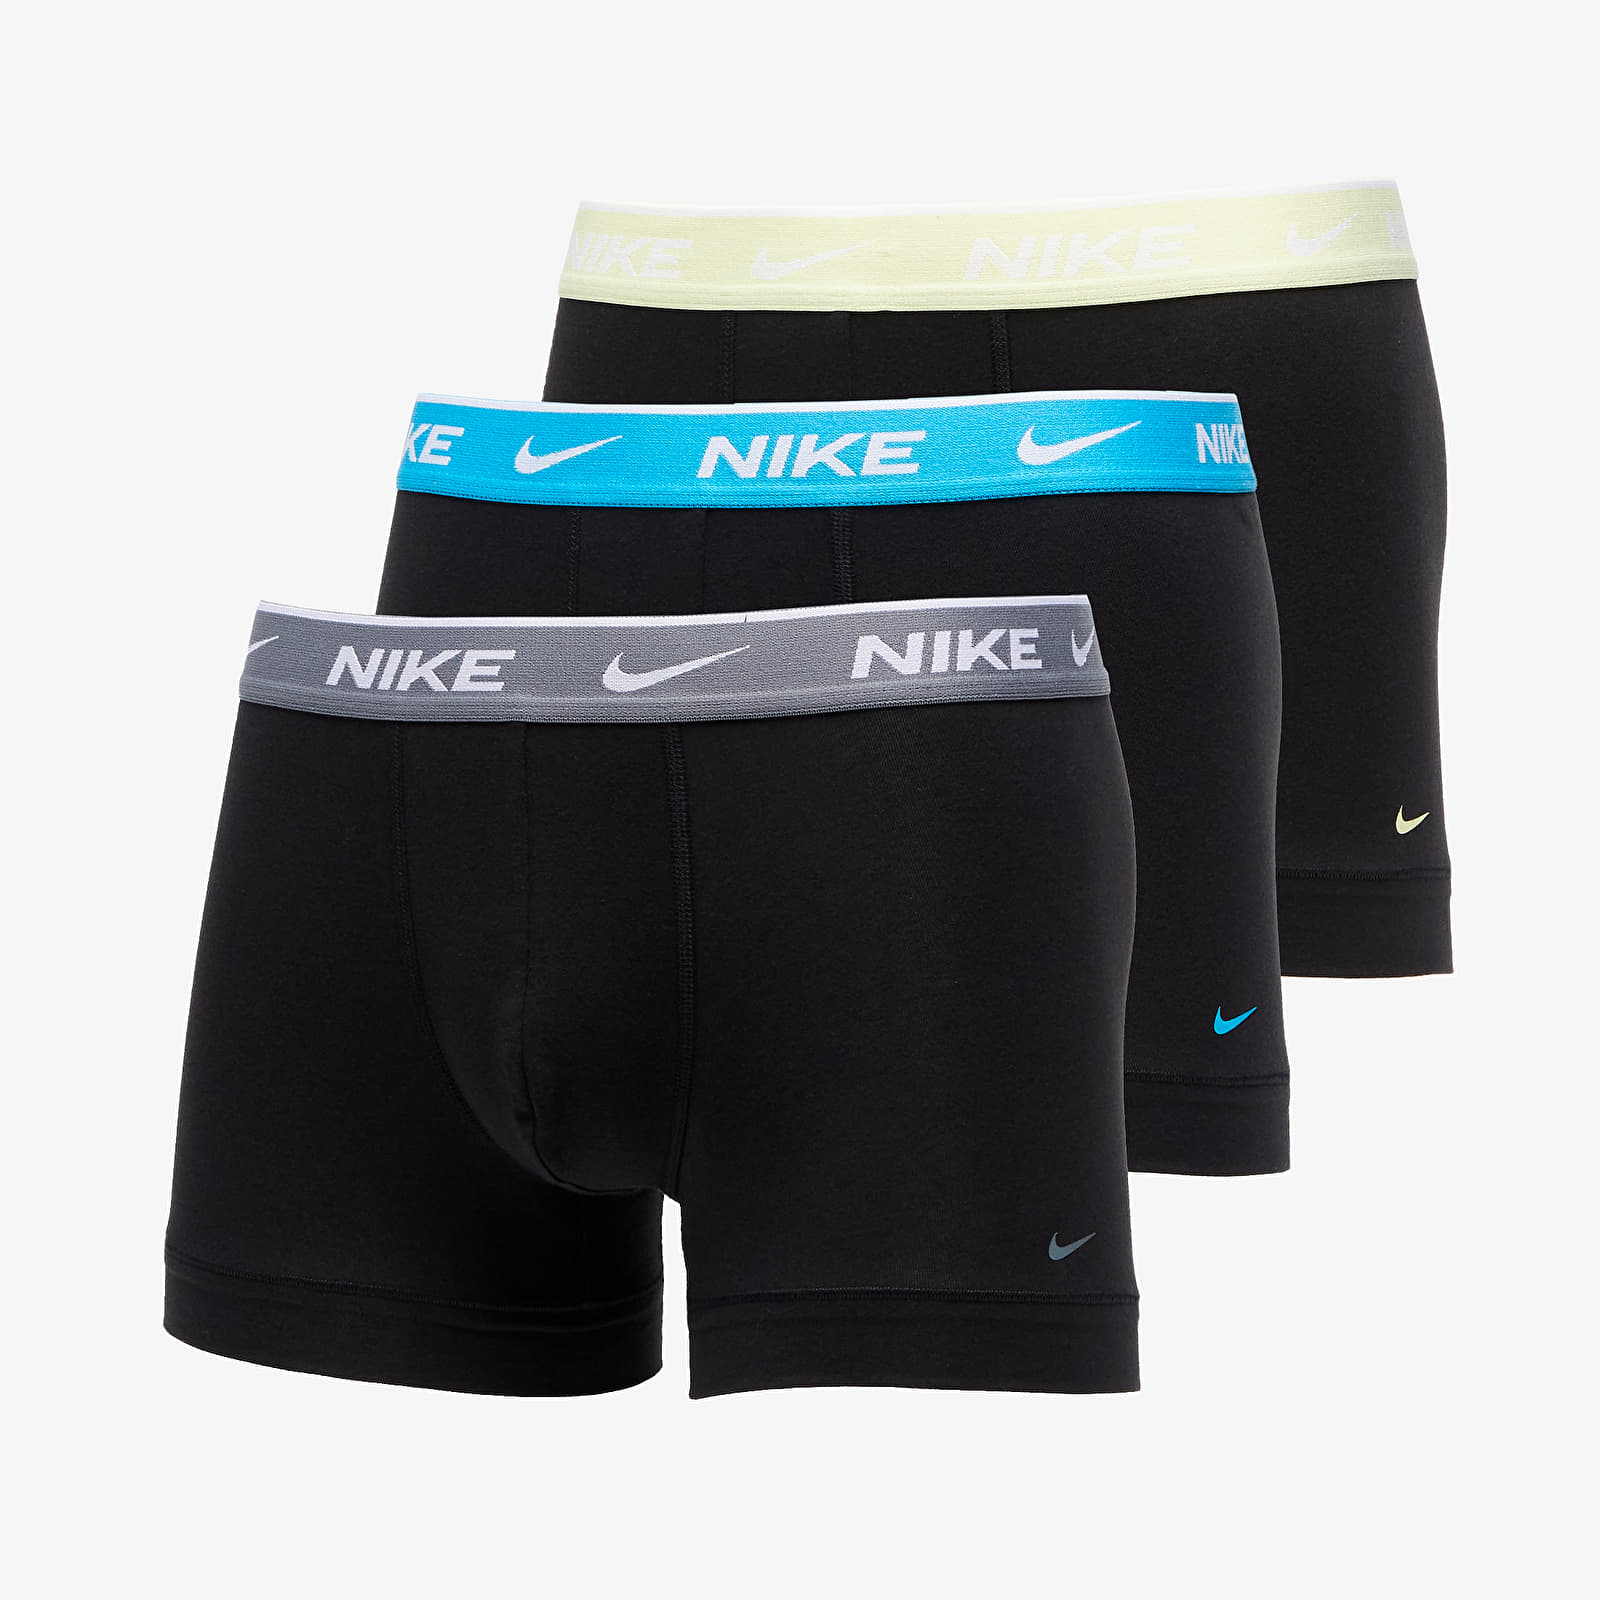 Boxer Nike Dri-FIT Everyday Cotton Stretch Trunk 3-Pack Black/ Blue Light/ Citron/ Cool Grey